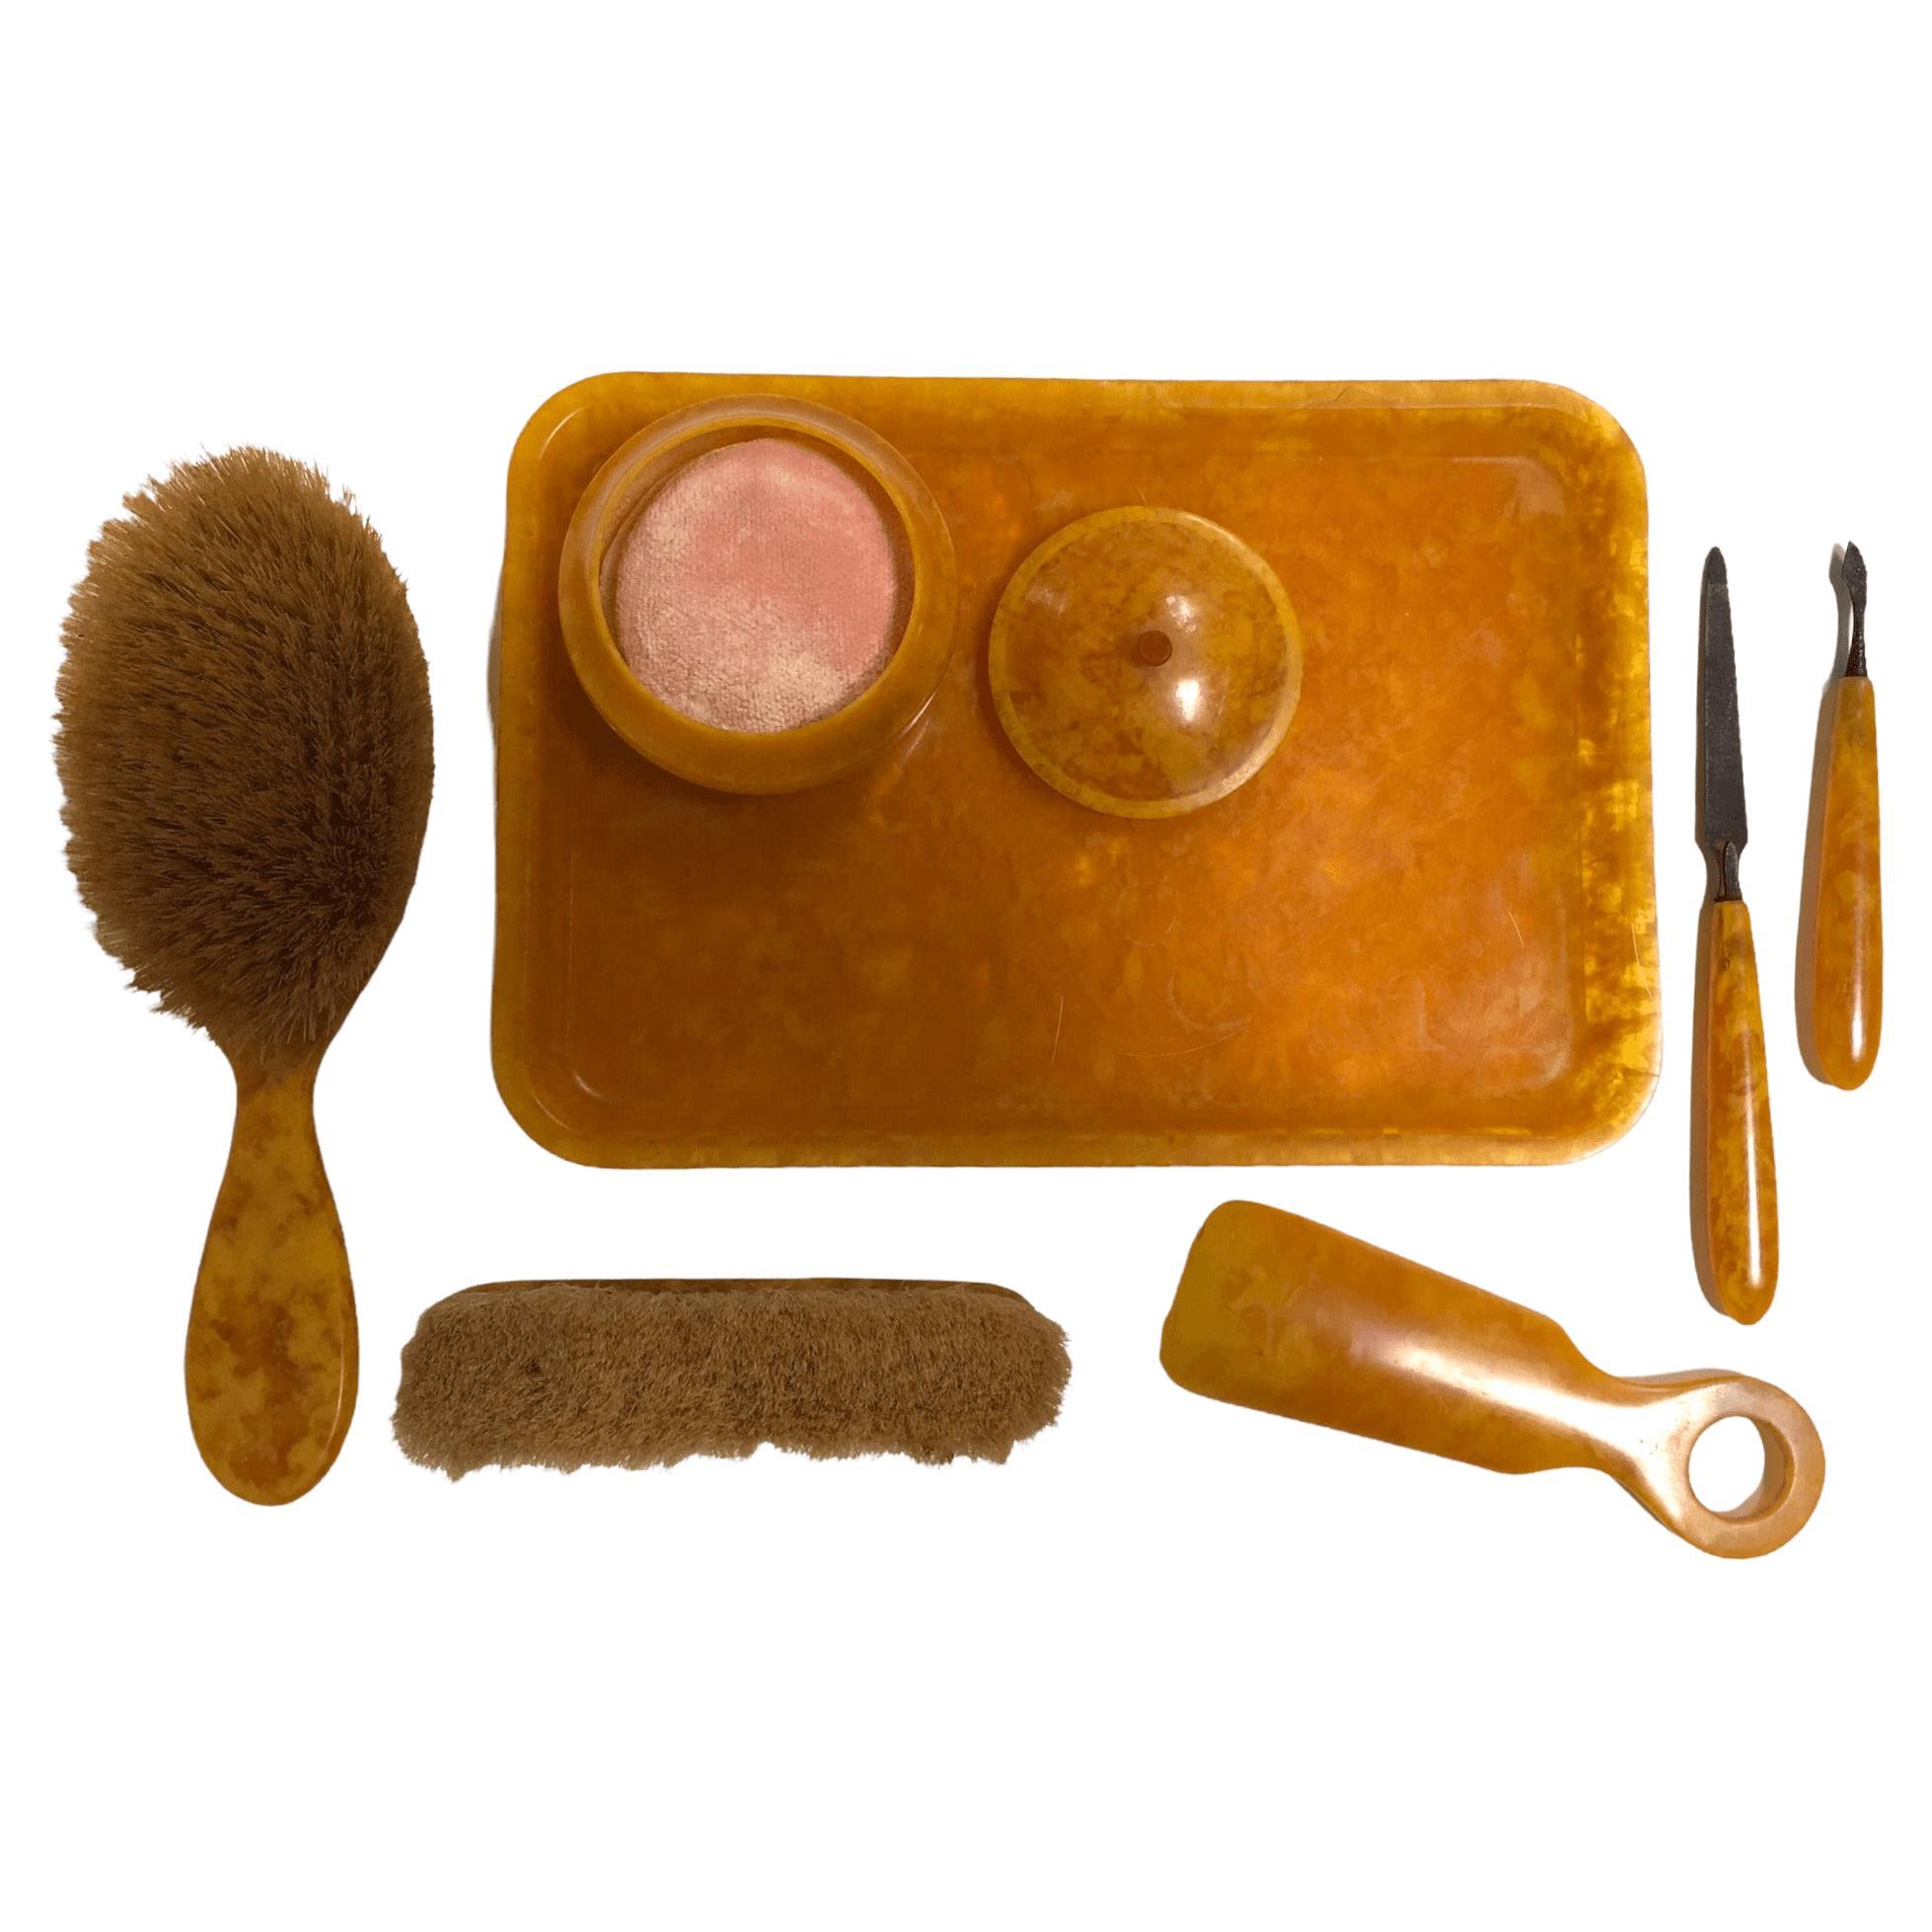 Vintage Bakelite Vanity Set W/ Tray, Brushes, Powder Box, & Shoehorn